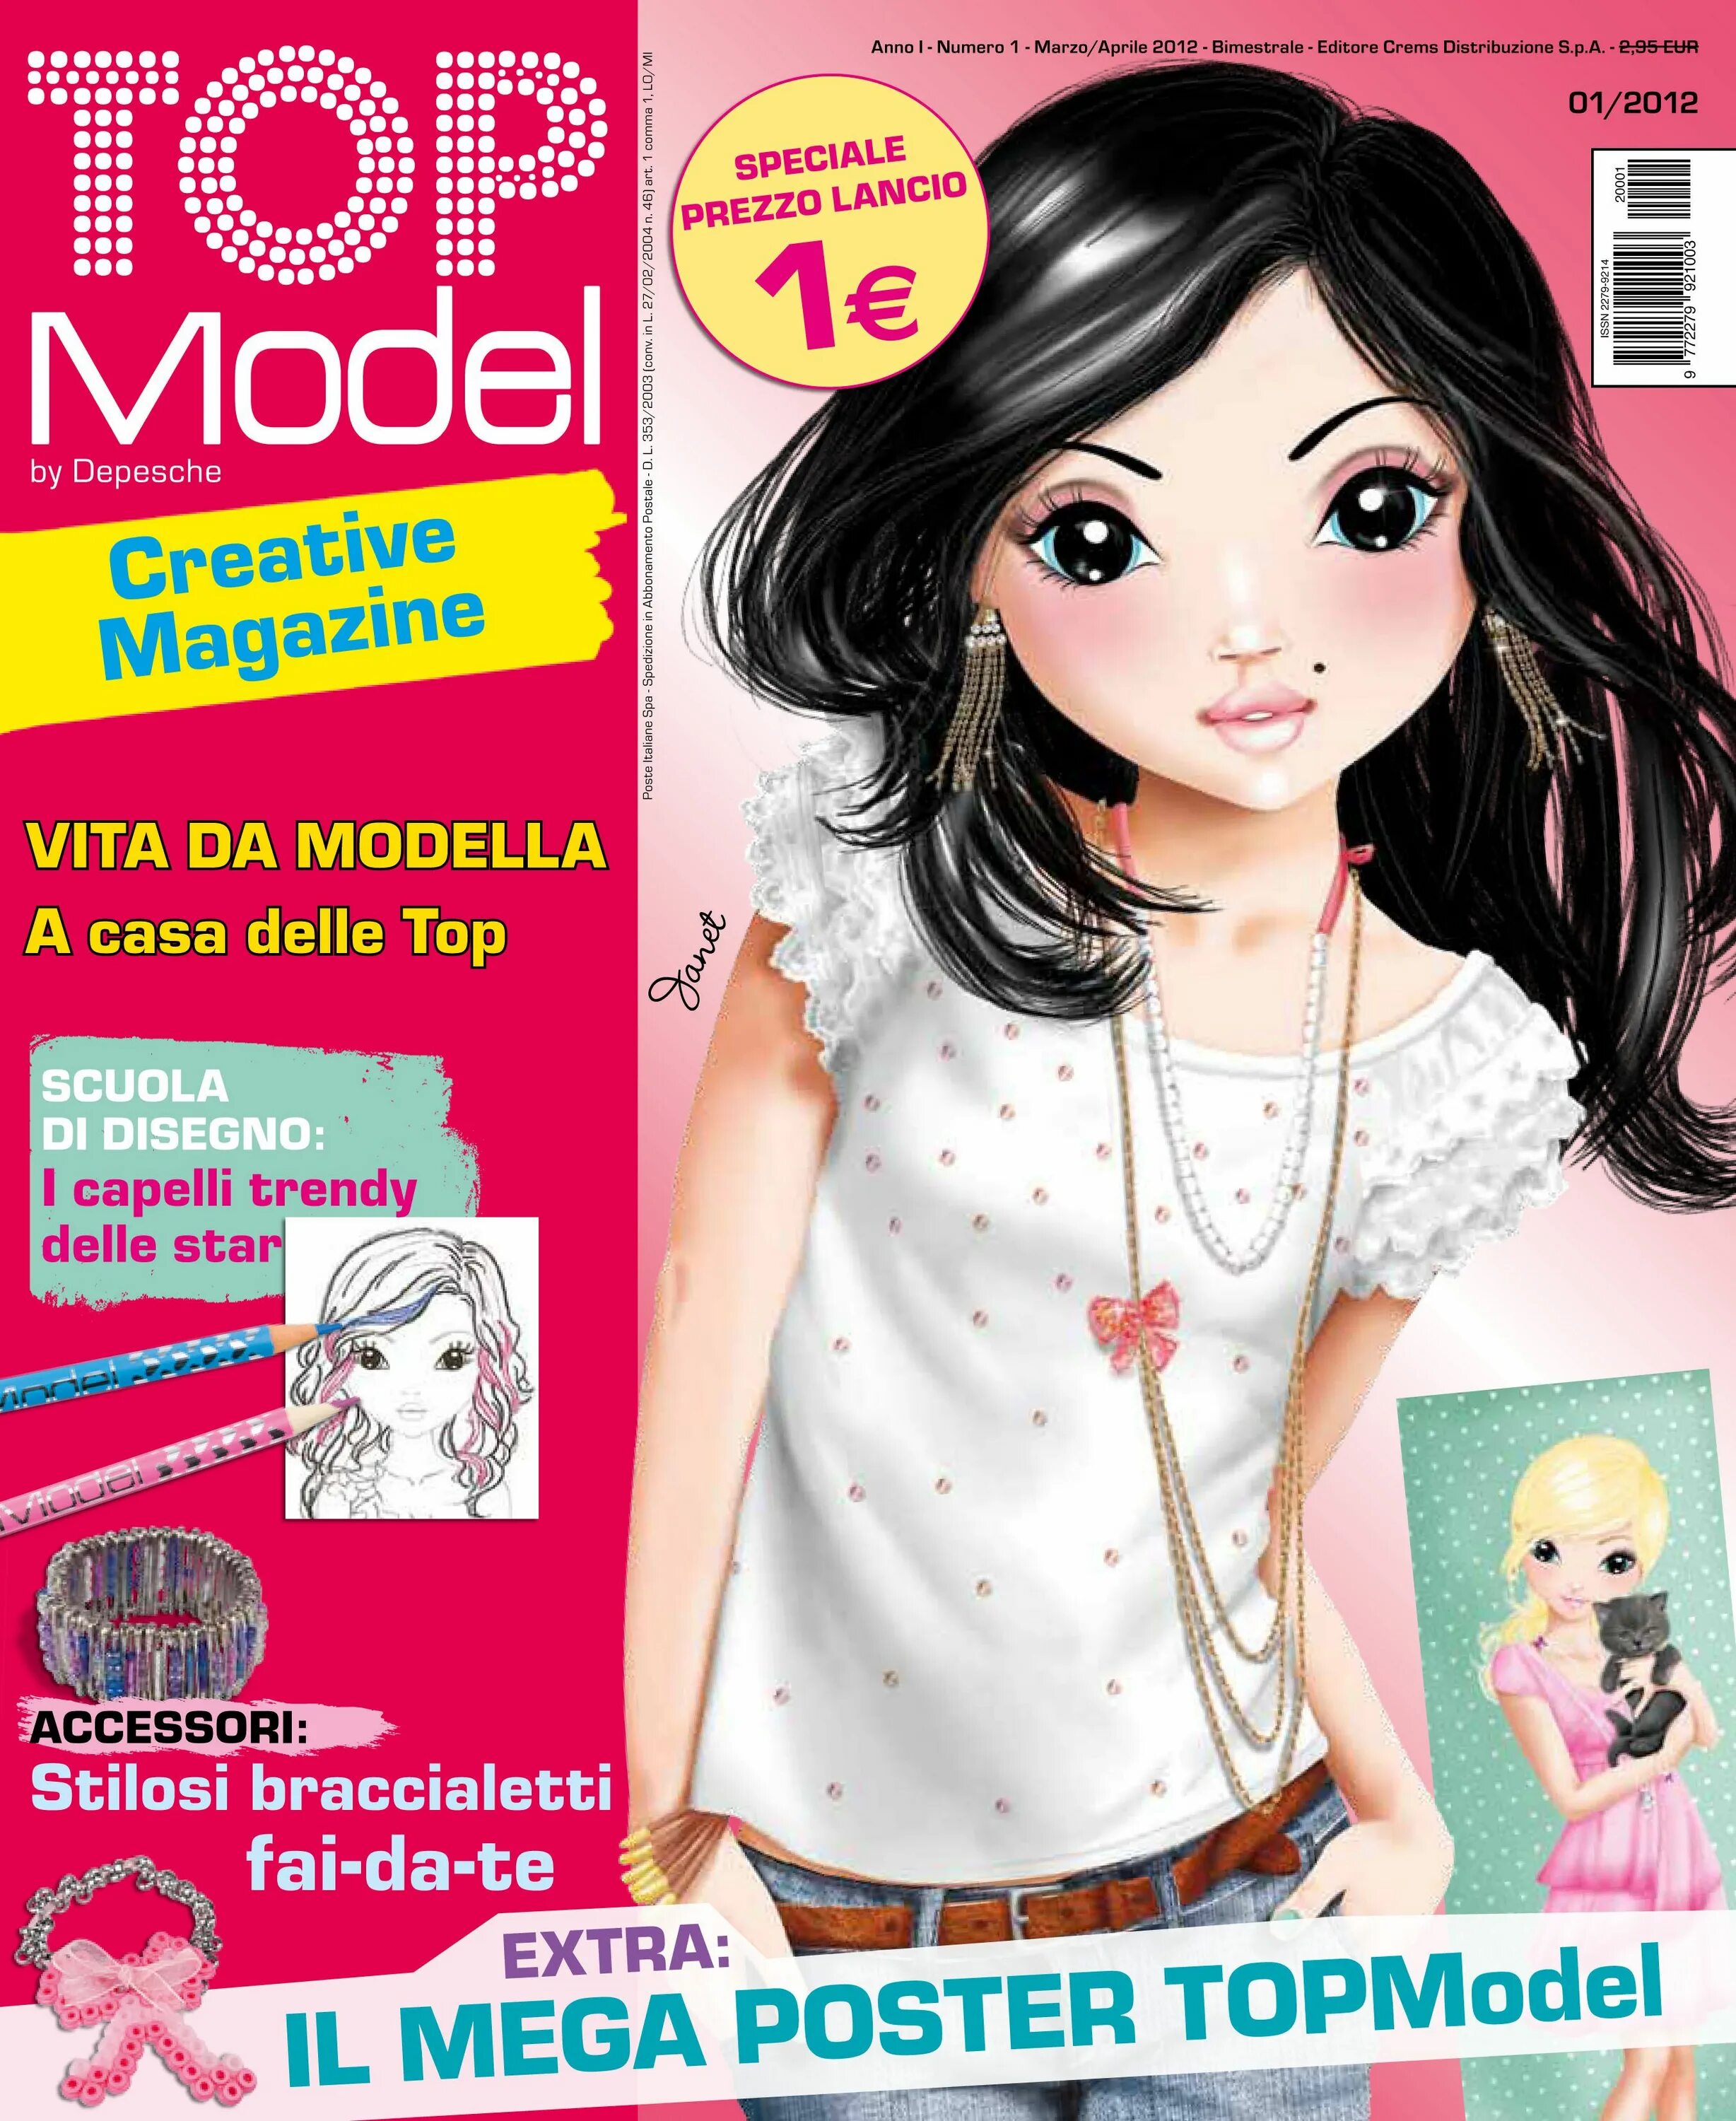 Top magazine. Журнал топ модели. Топ-модель журнал для девочек. Топ модель из журнала. Топ-модель детский журнал.